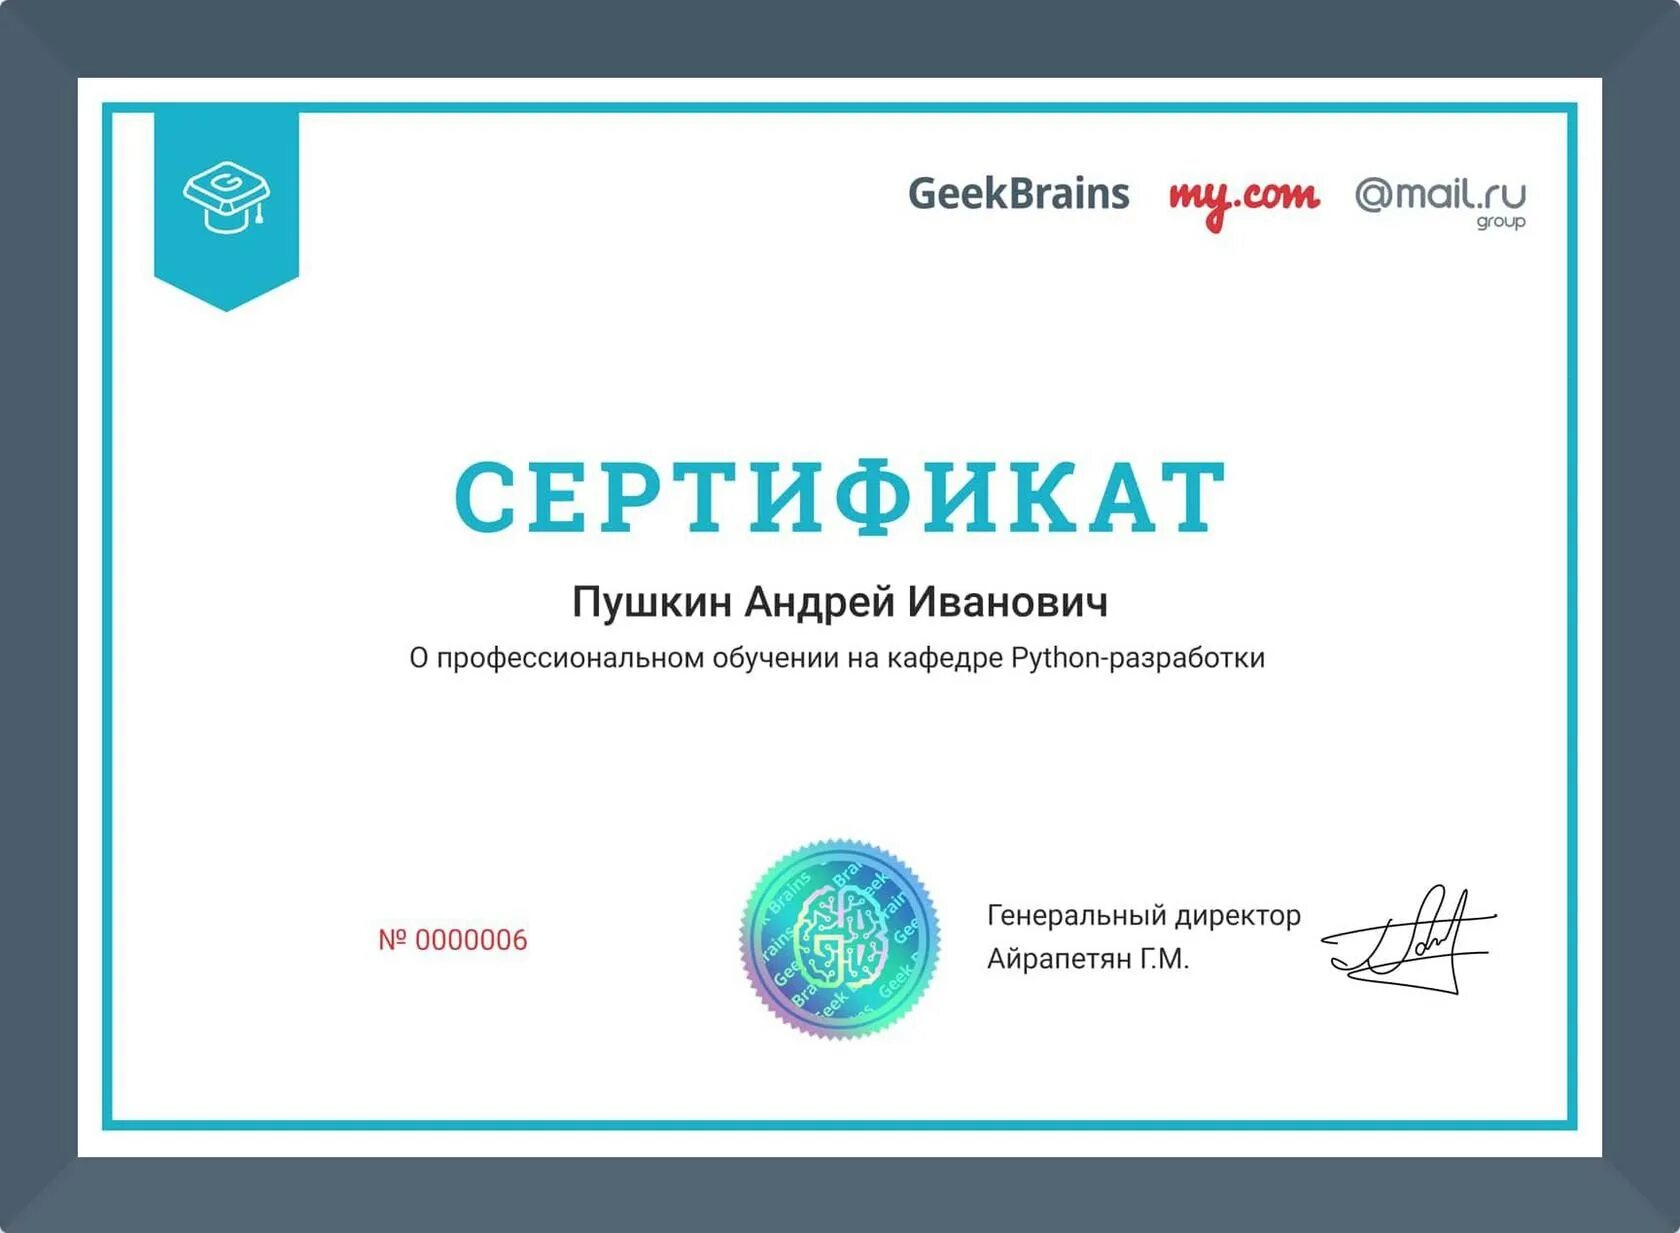 Сайт сертификатов на андроид. Сертификат от GEEKBRAINS. Сертификат по программированию. Сертификат по веб программированию.